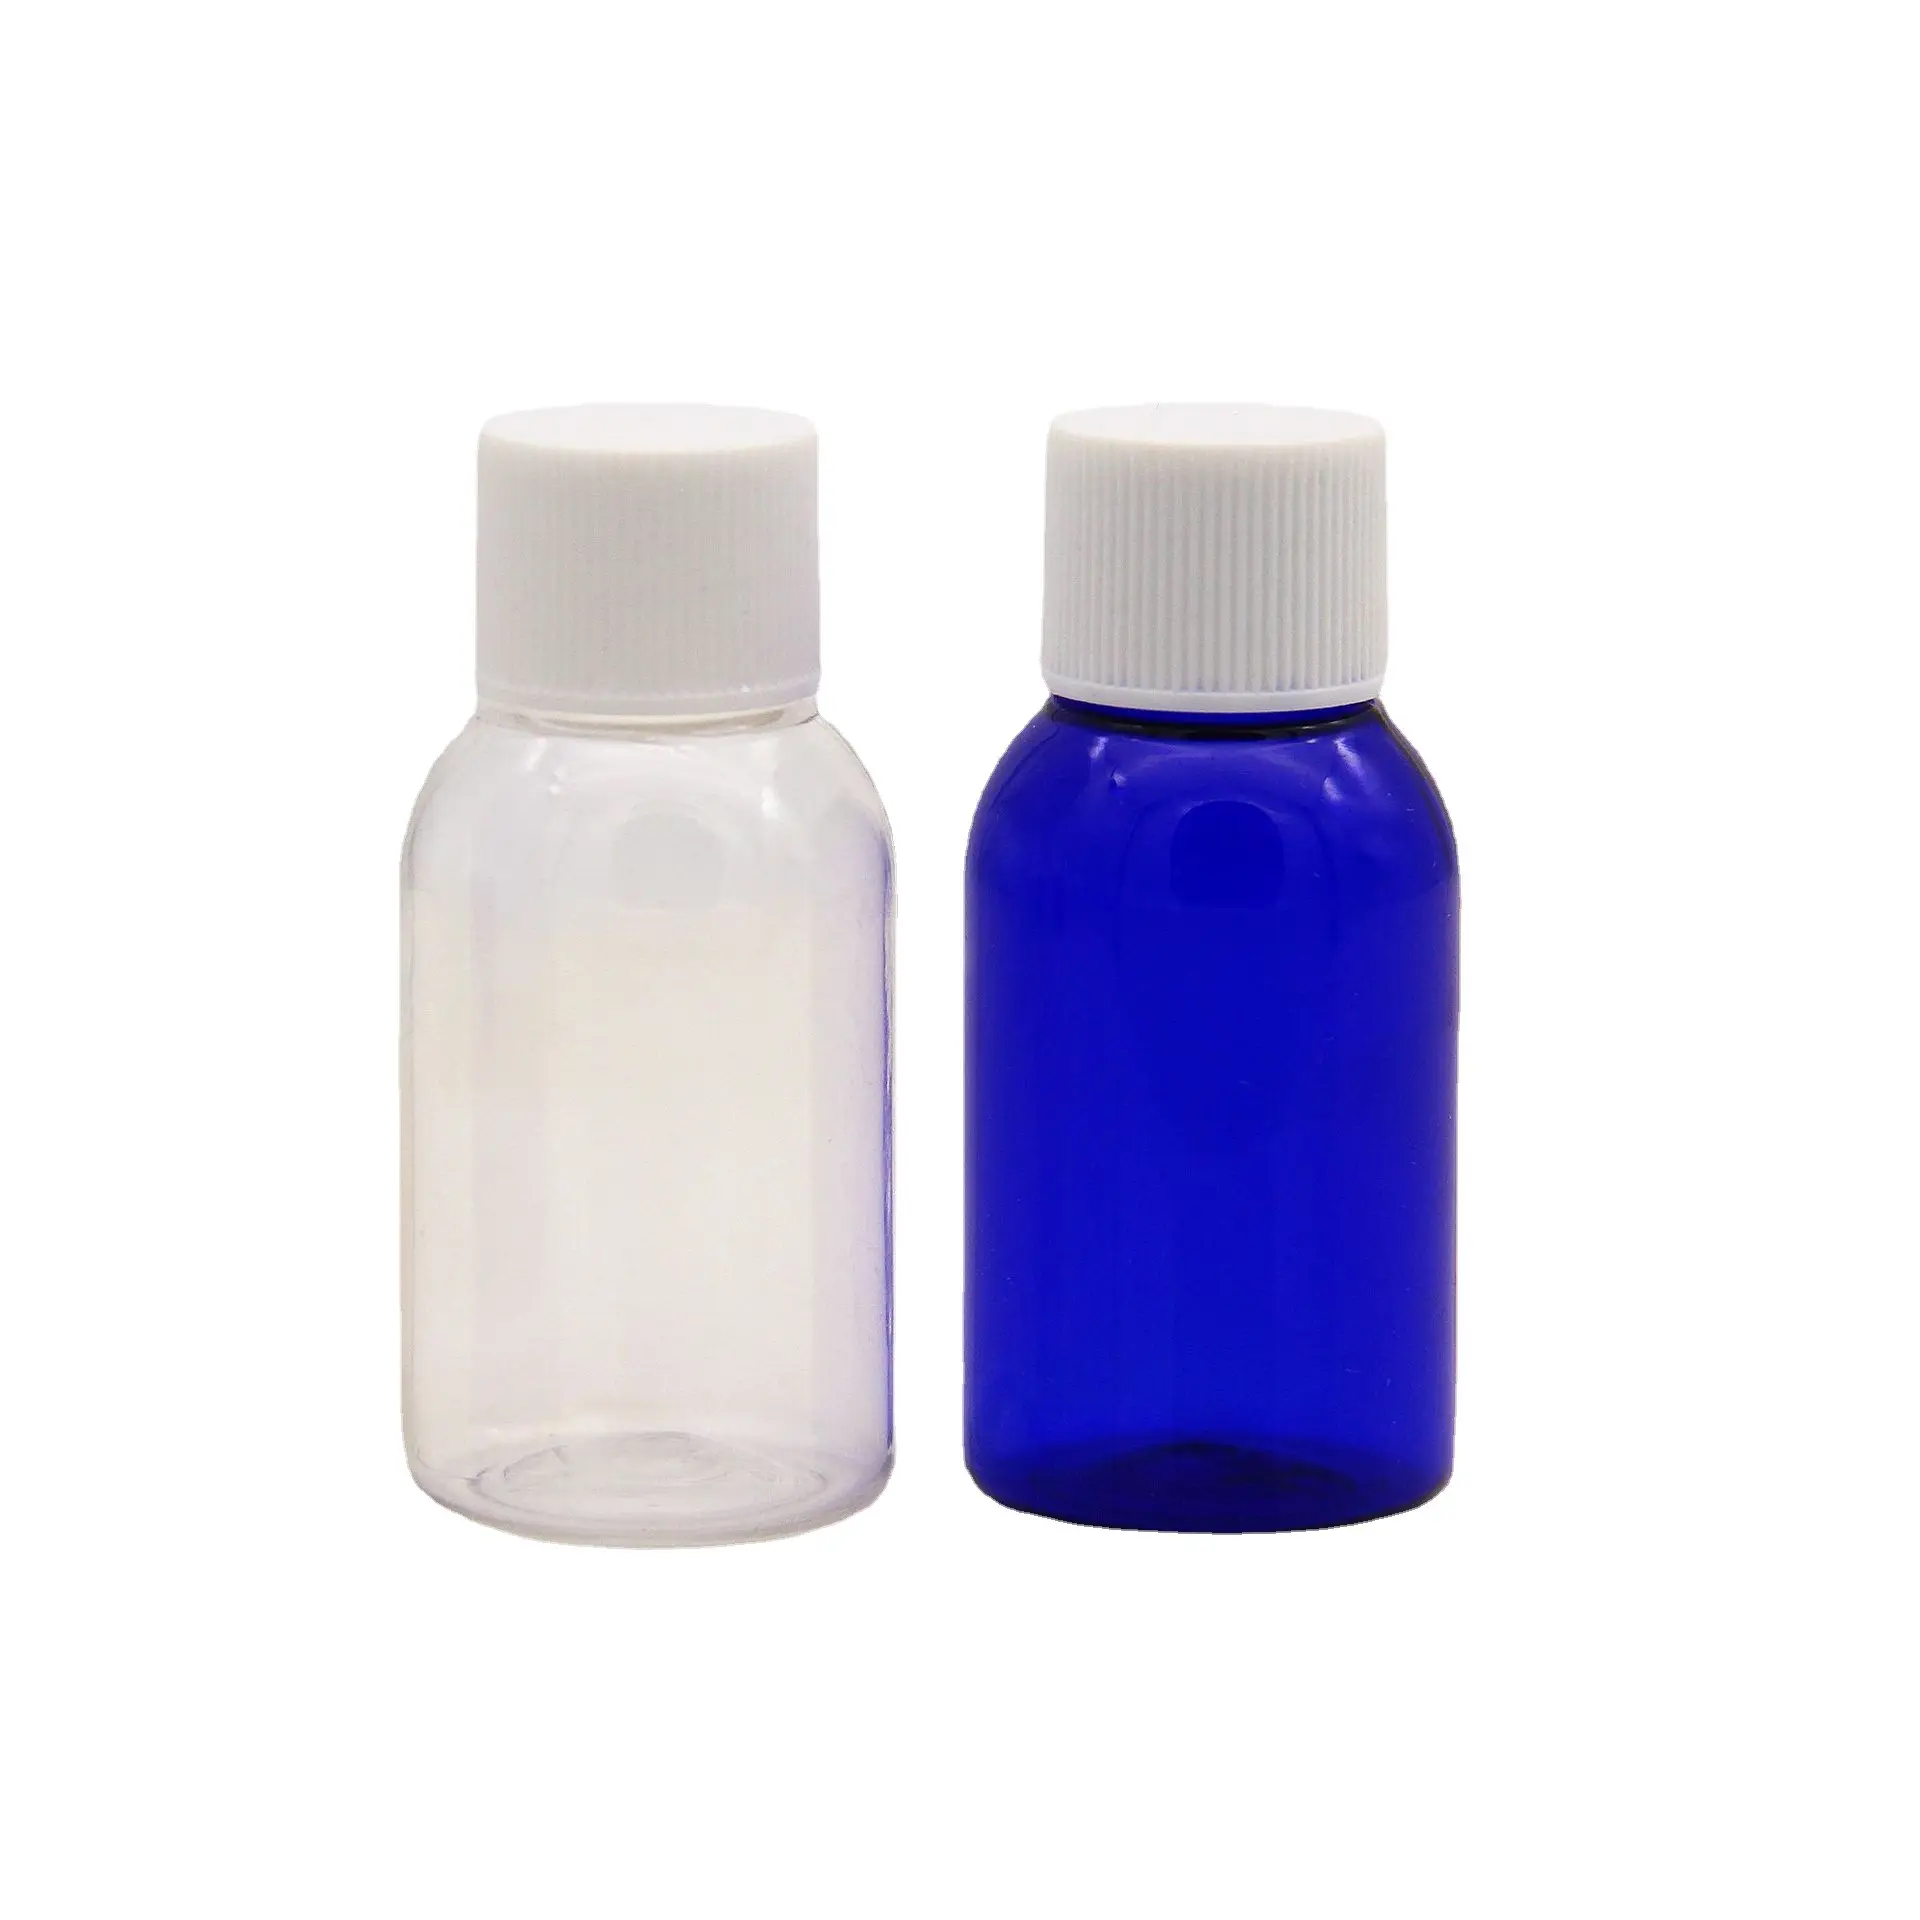 Botol plastik 30ml cairan Oral biru PET dengan tutup sekrup botol minyak esensial kemasan kosmetik